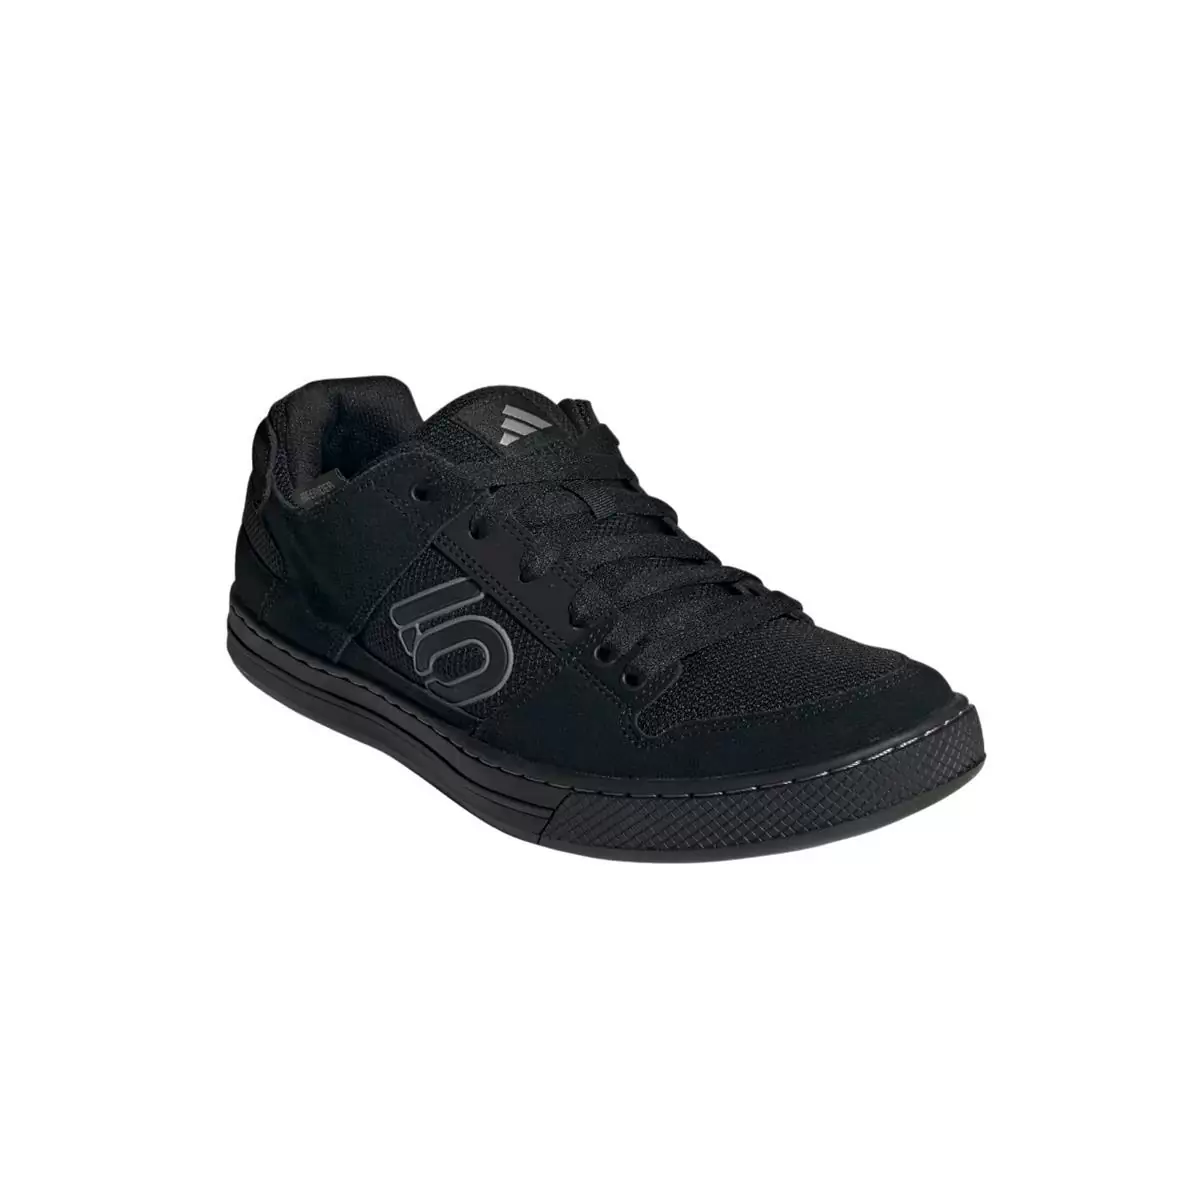 MTB Shoes Flat Freerider Black Size 45 #4